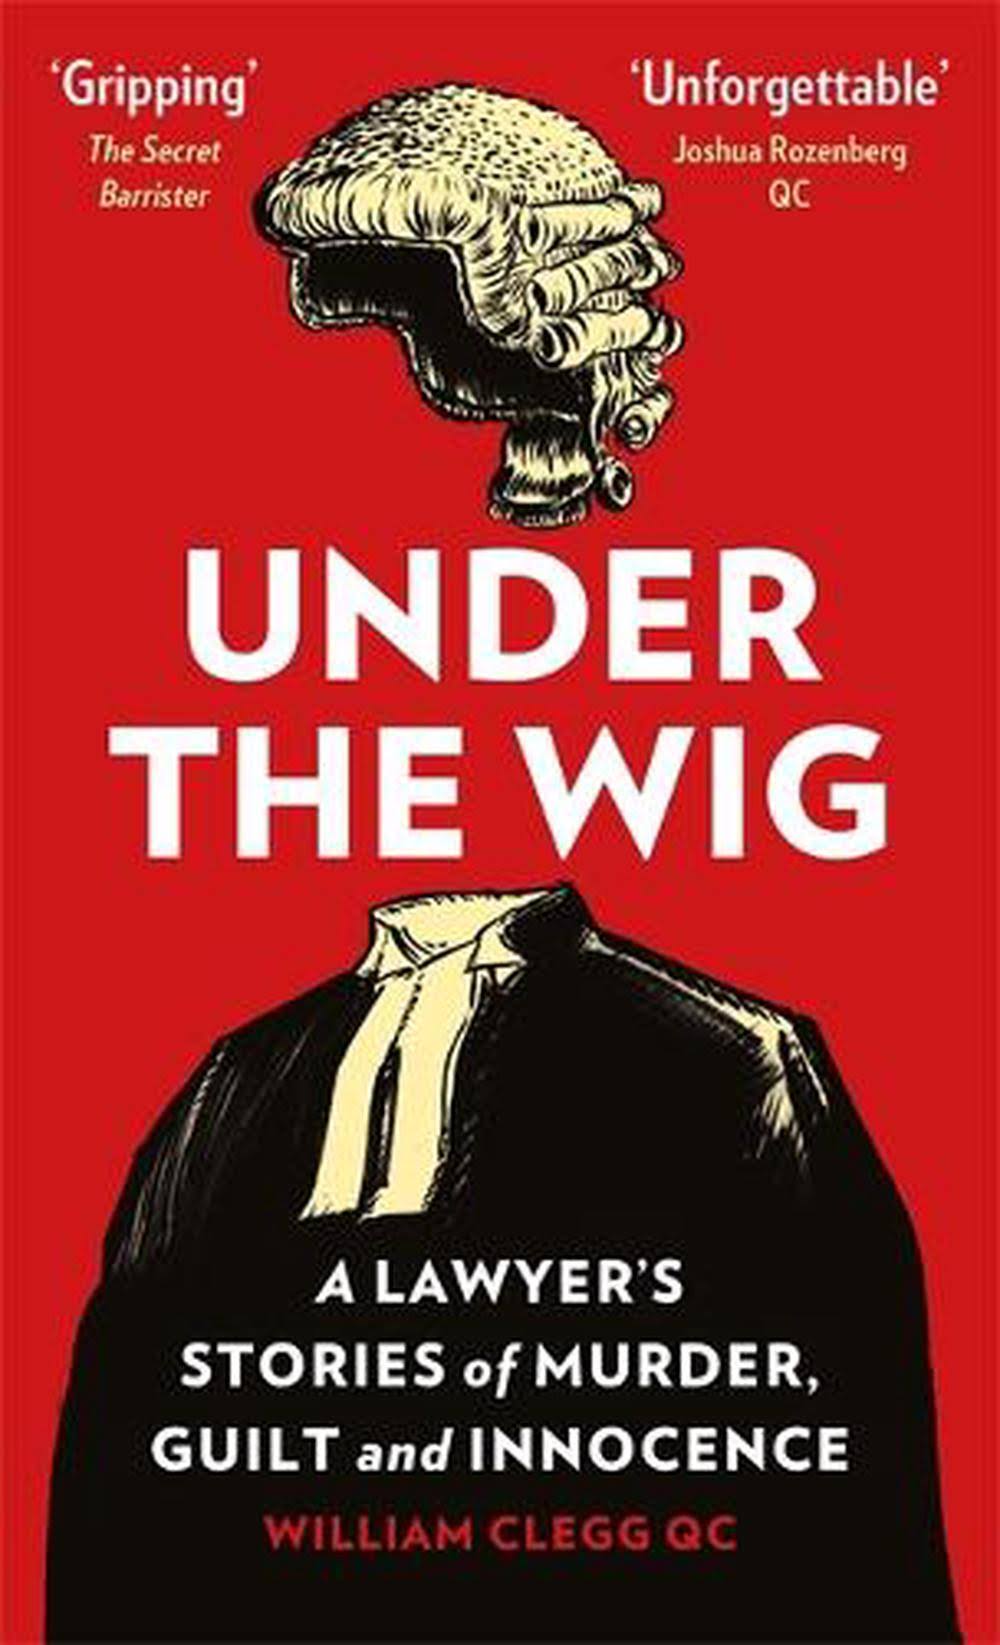 Under The Wig by William Clegg